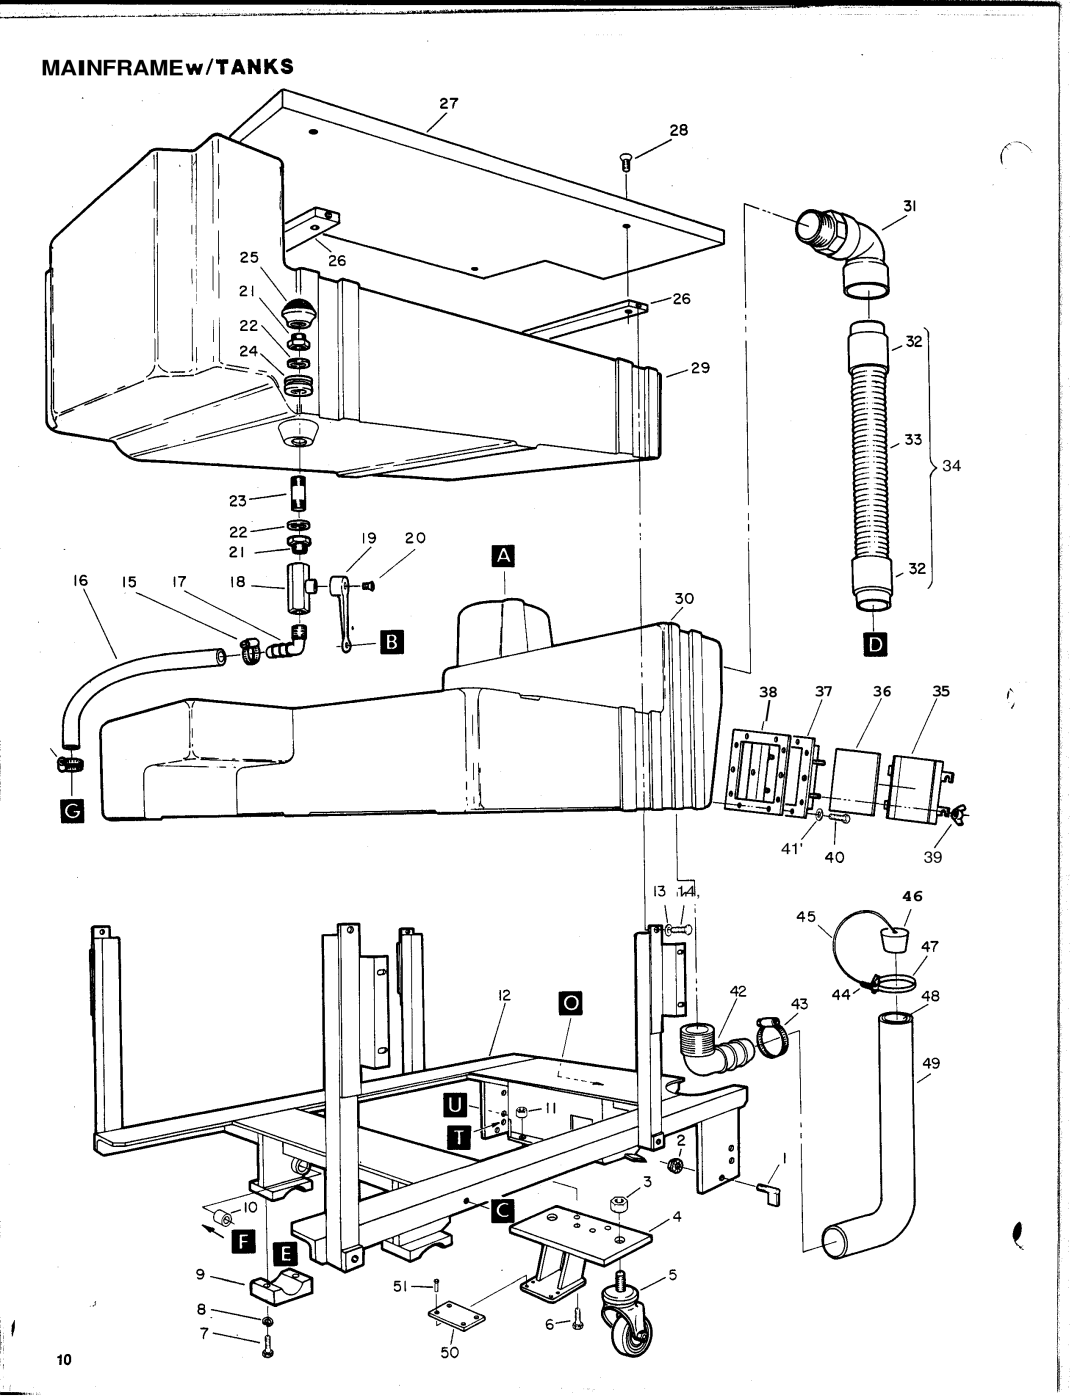 Windsor PT-20 manual Mainframewitanks, 41 io, 13 14,1 